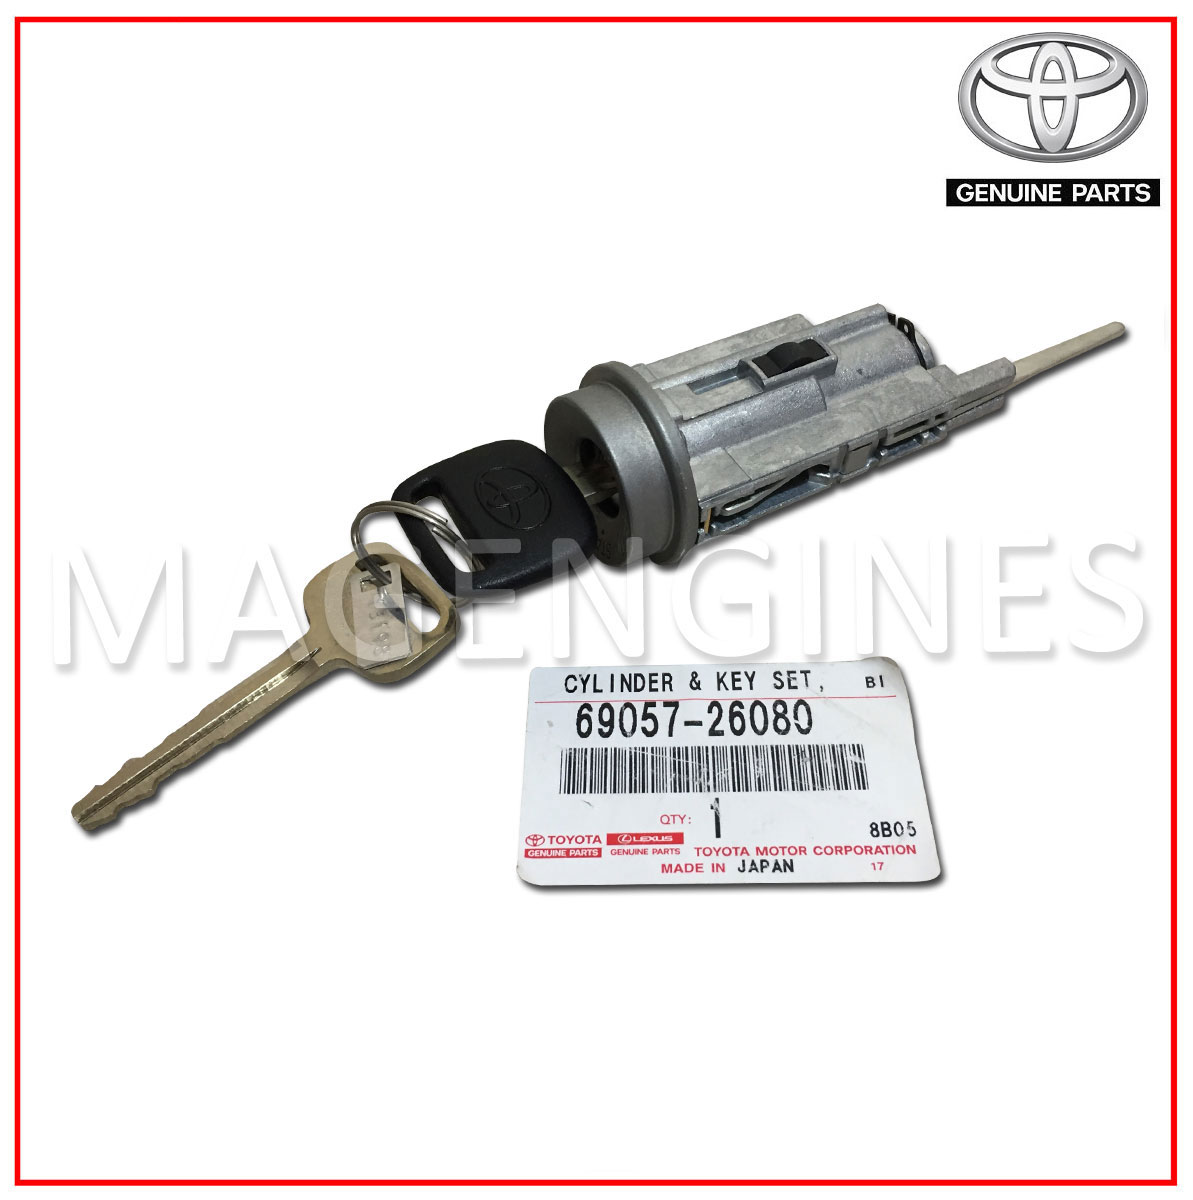 Toyota 69057-14180 Ignition Switch Lock Cylinder and Key Set 